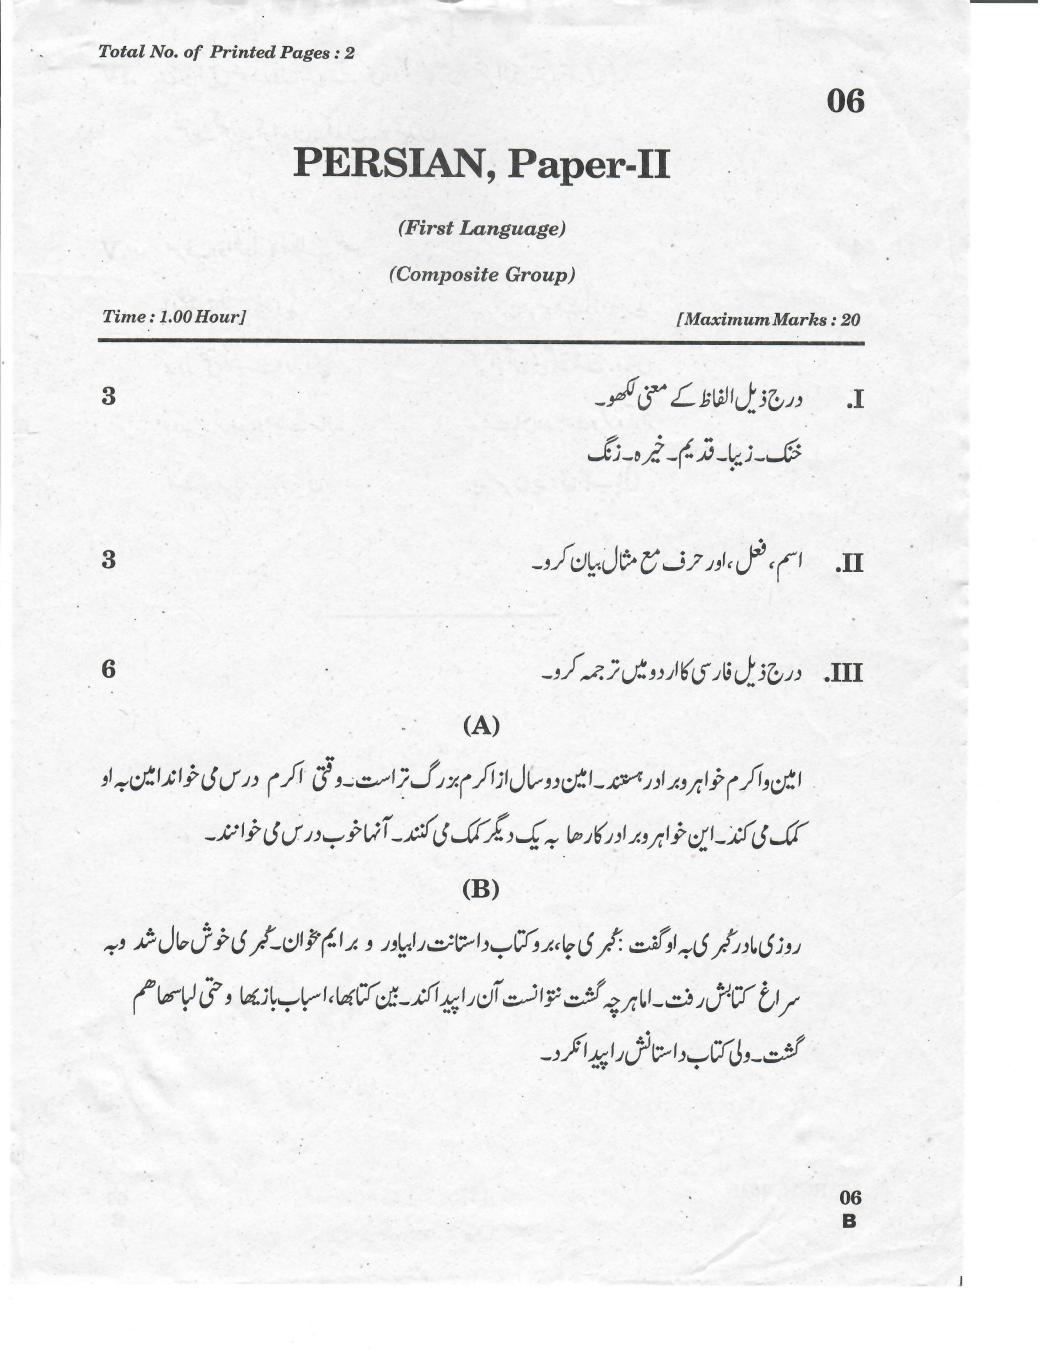 AP 10th Class Question Paper 2019 Persian - Paper 2 (1st Language Composite) - Page 1